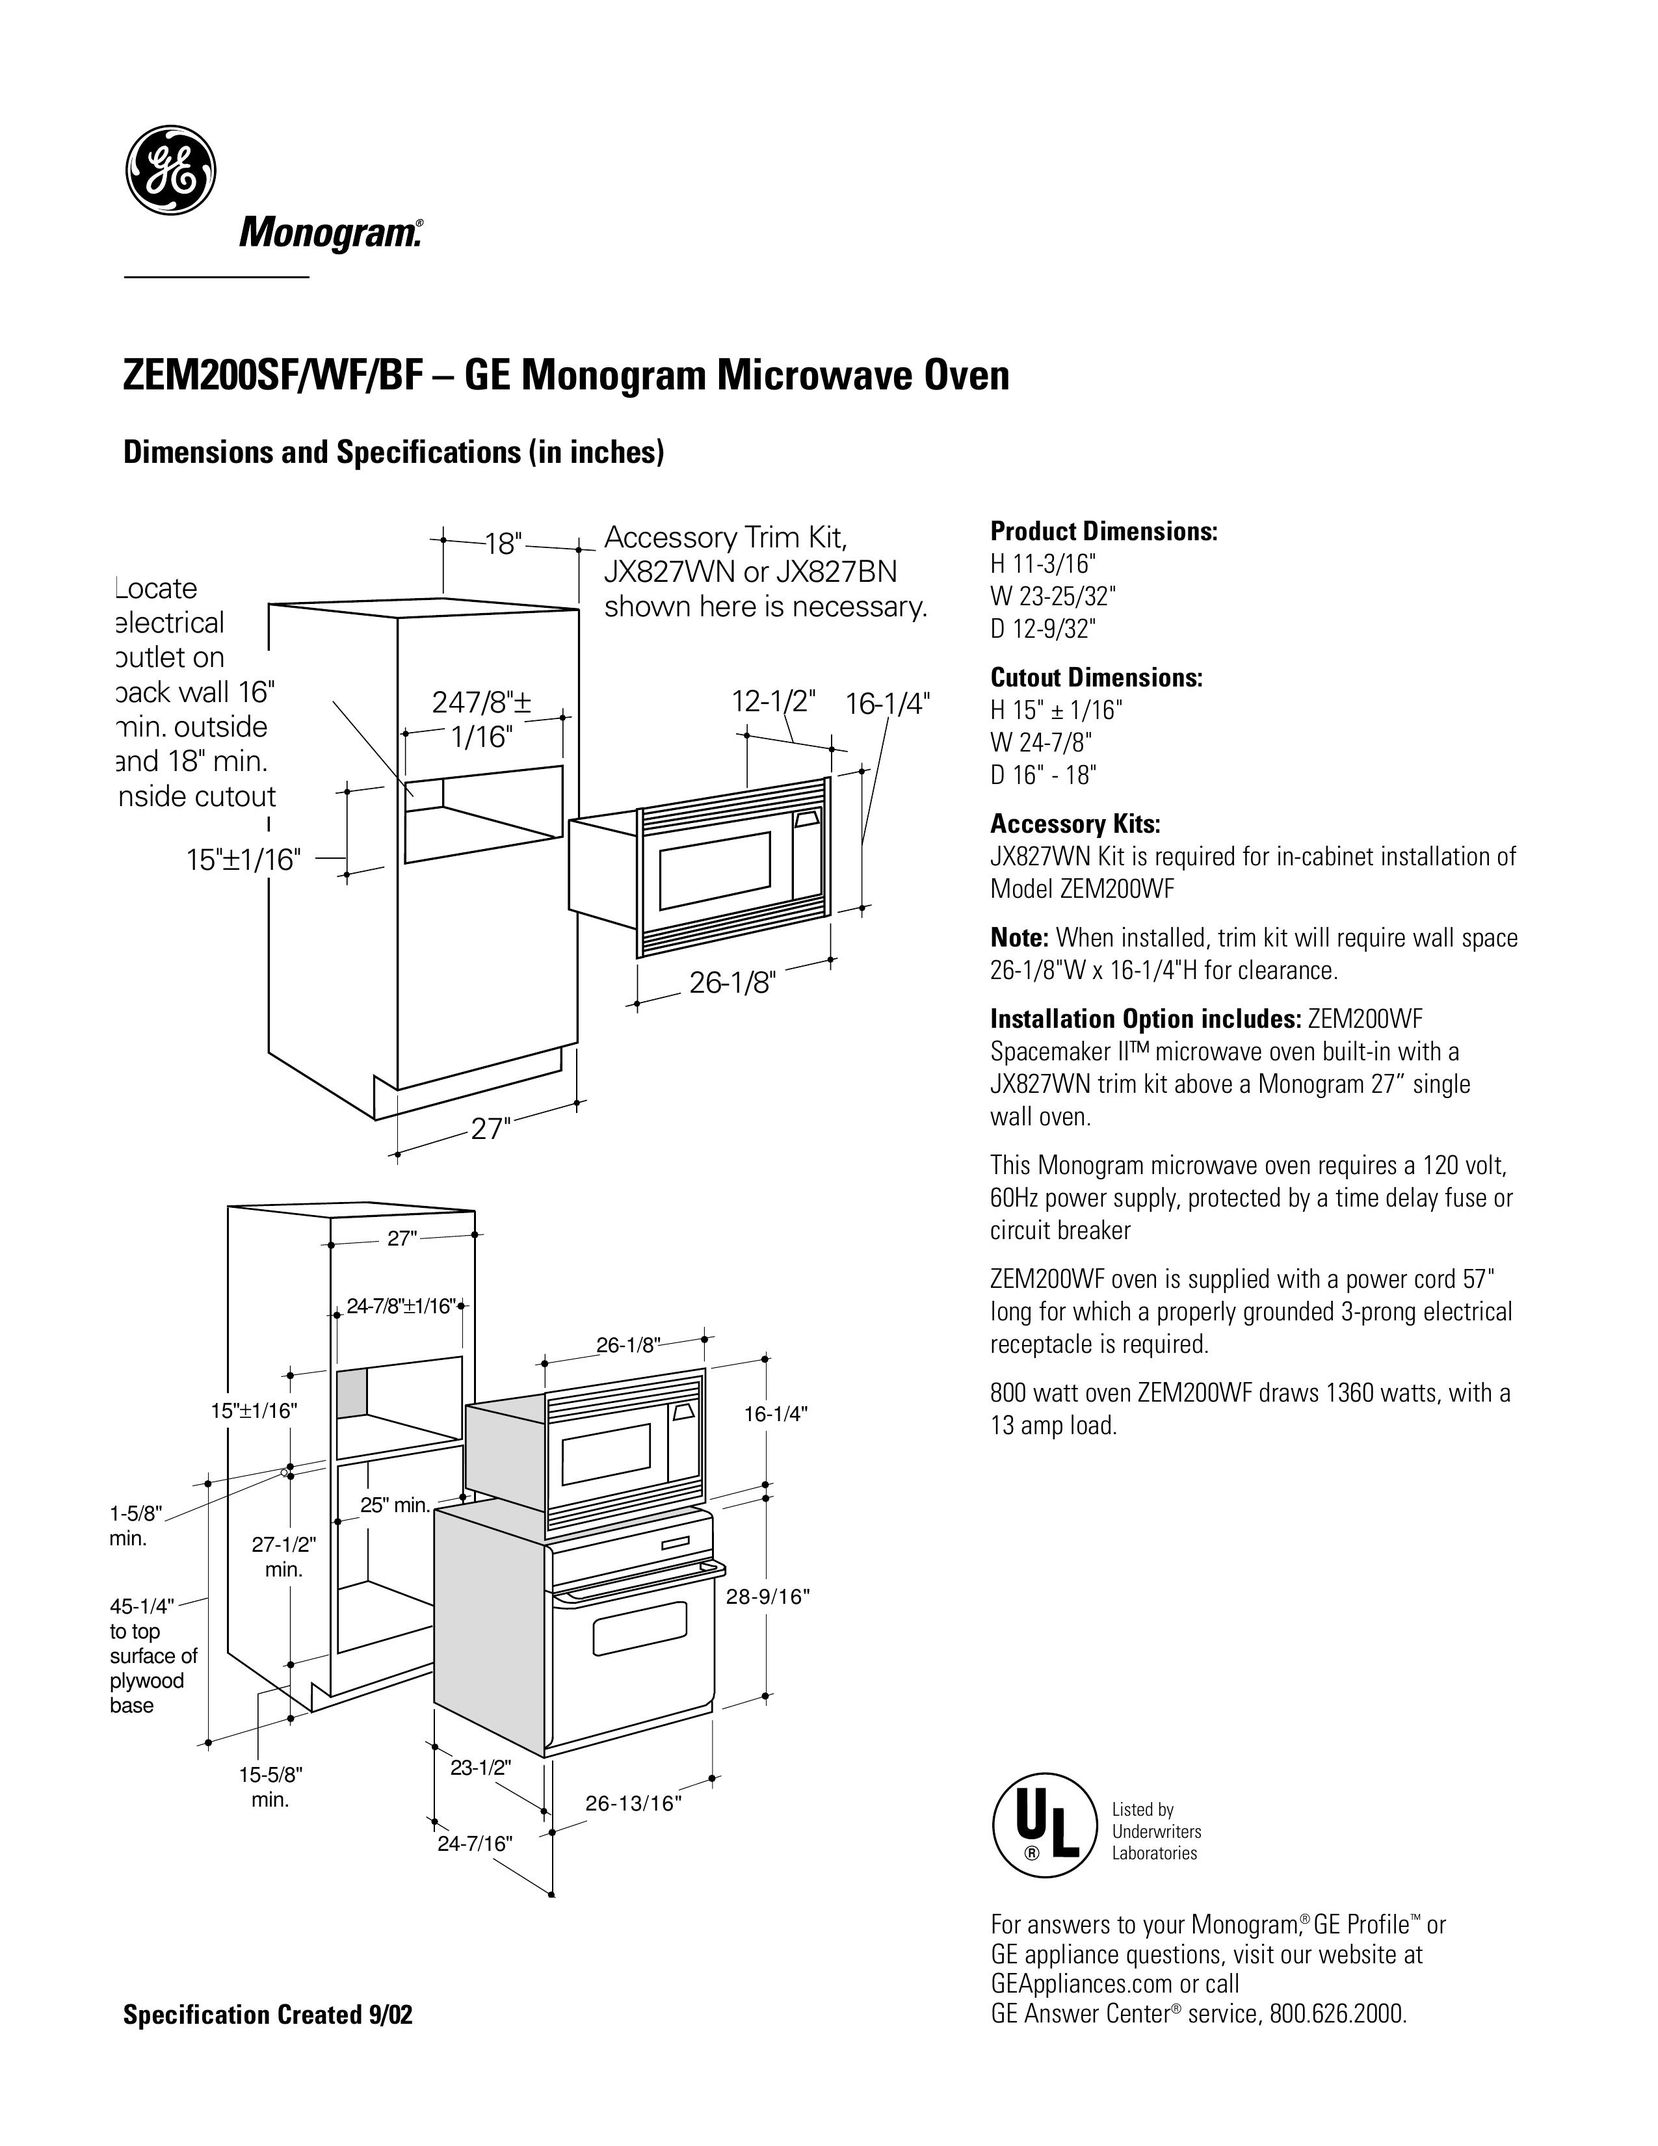 GE Monogram ZEM200BF Microwave Oven User Manual